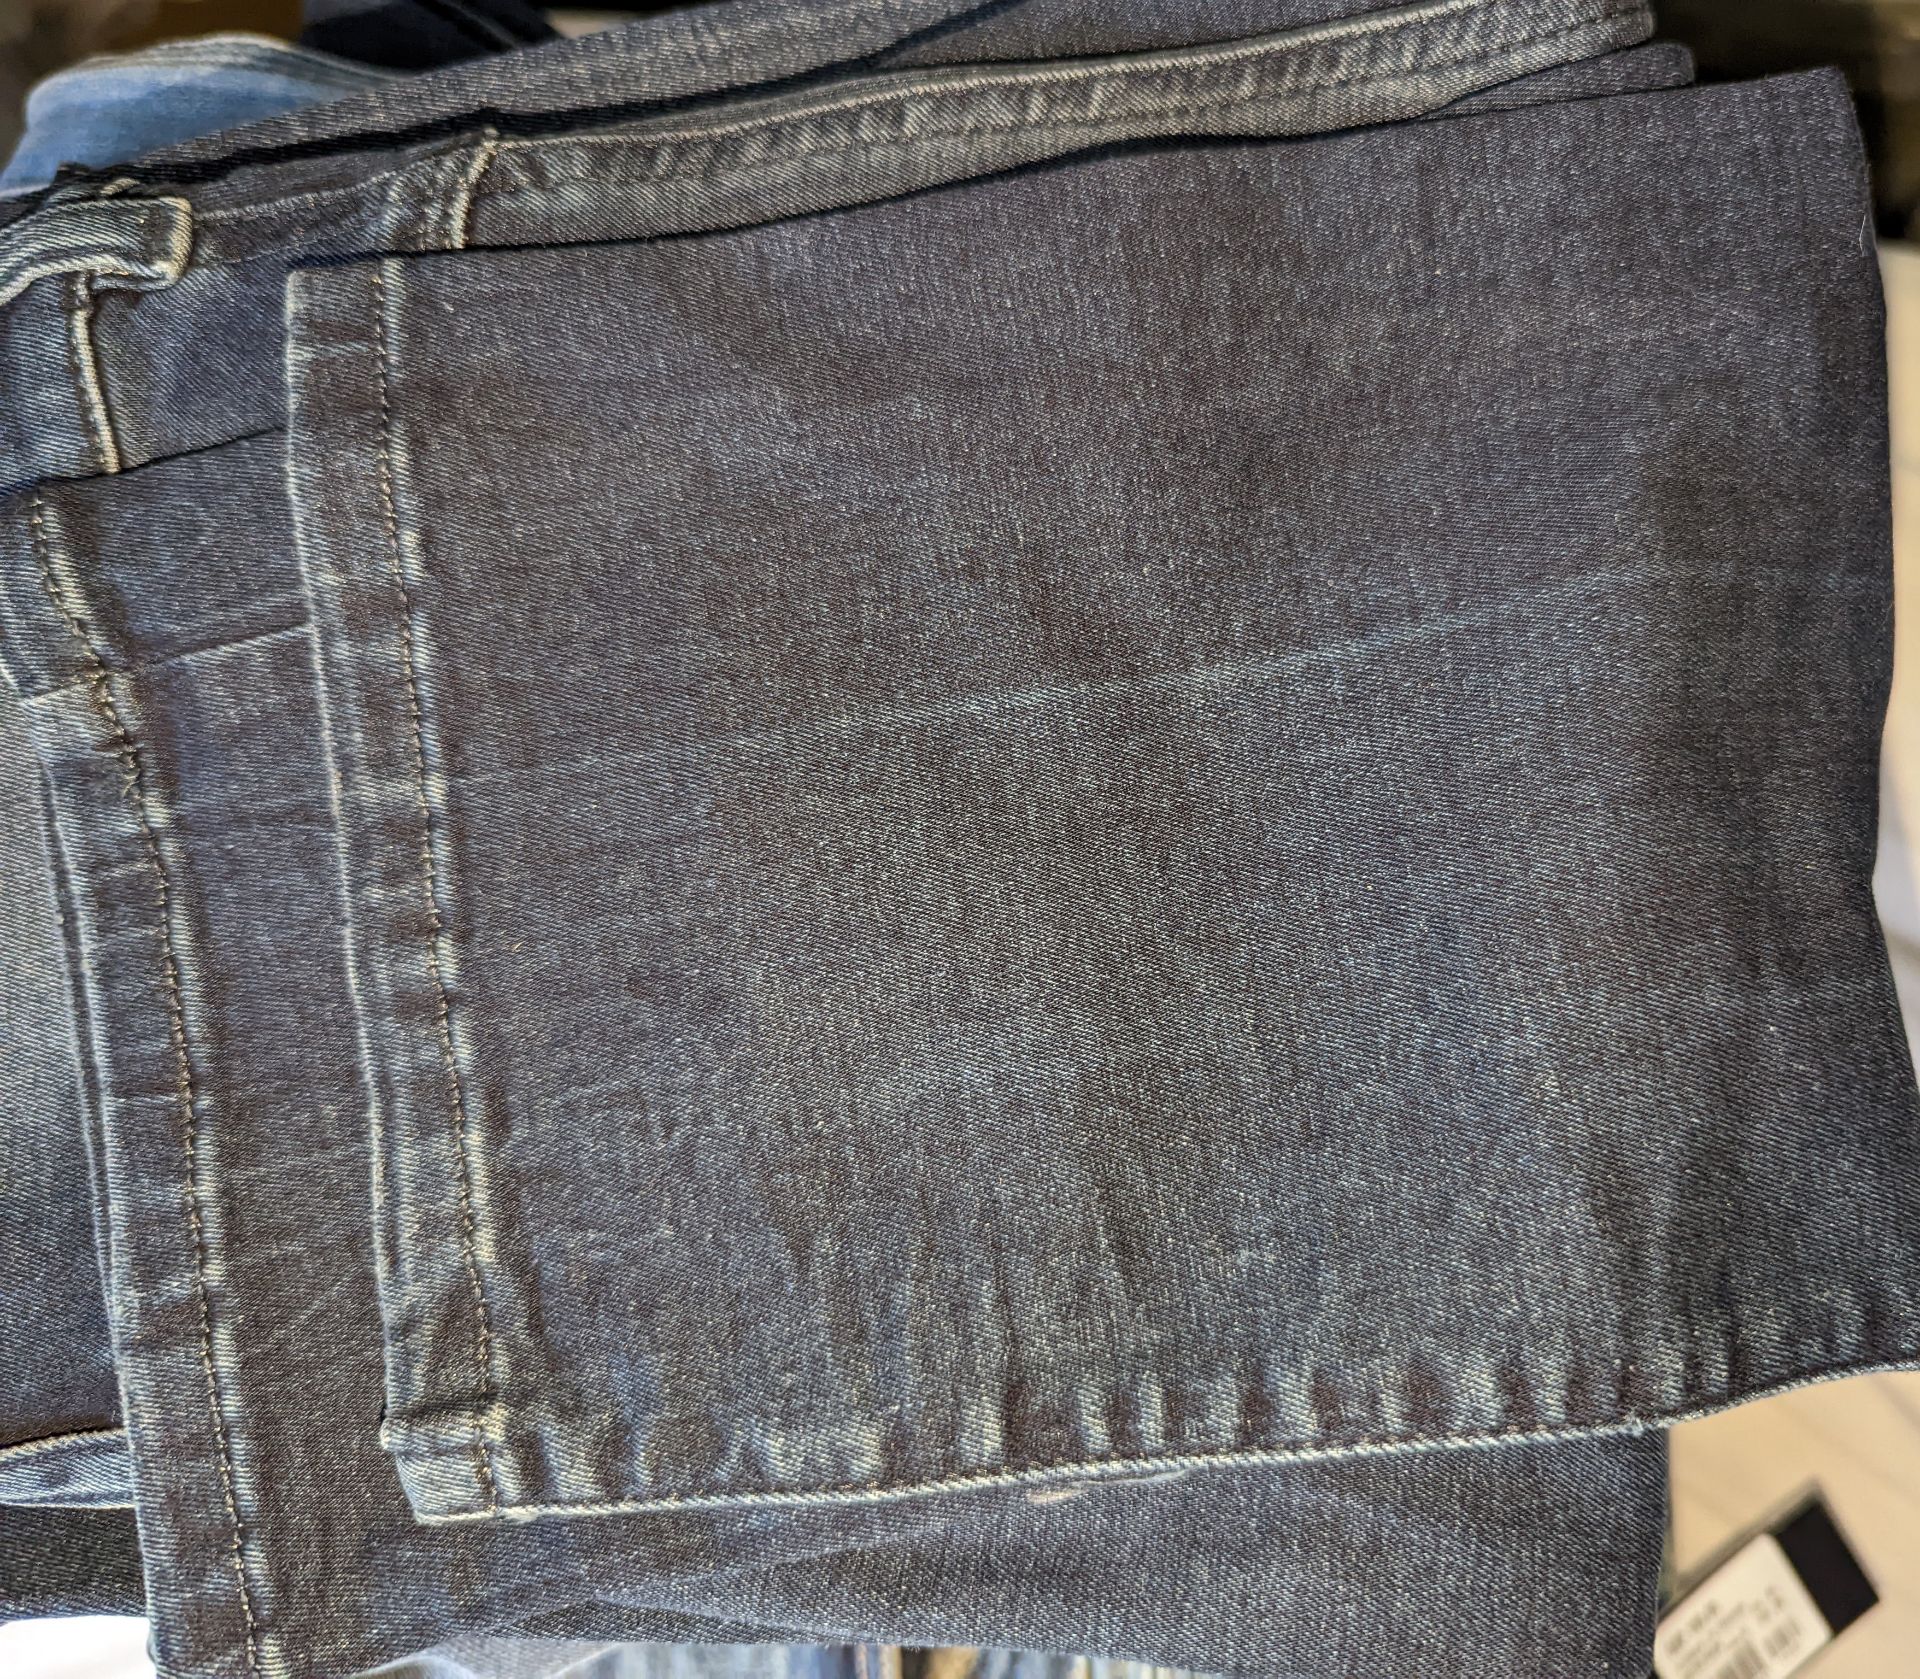 21 Brand New Men's/Women's Diesel Jeans - Image 4 of 6